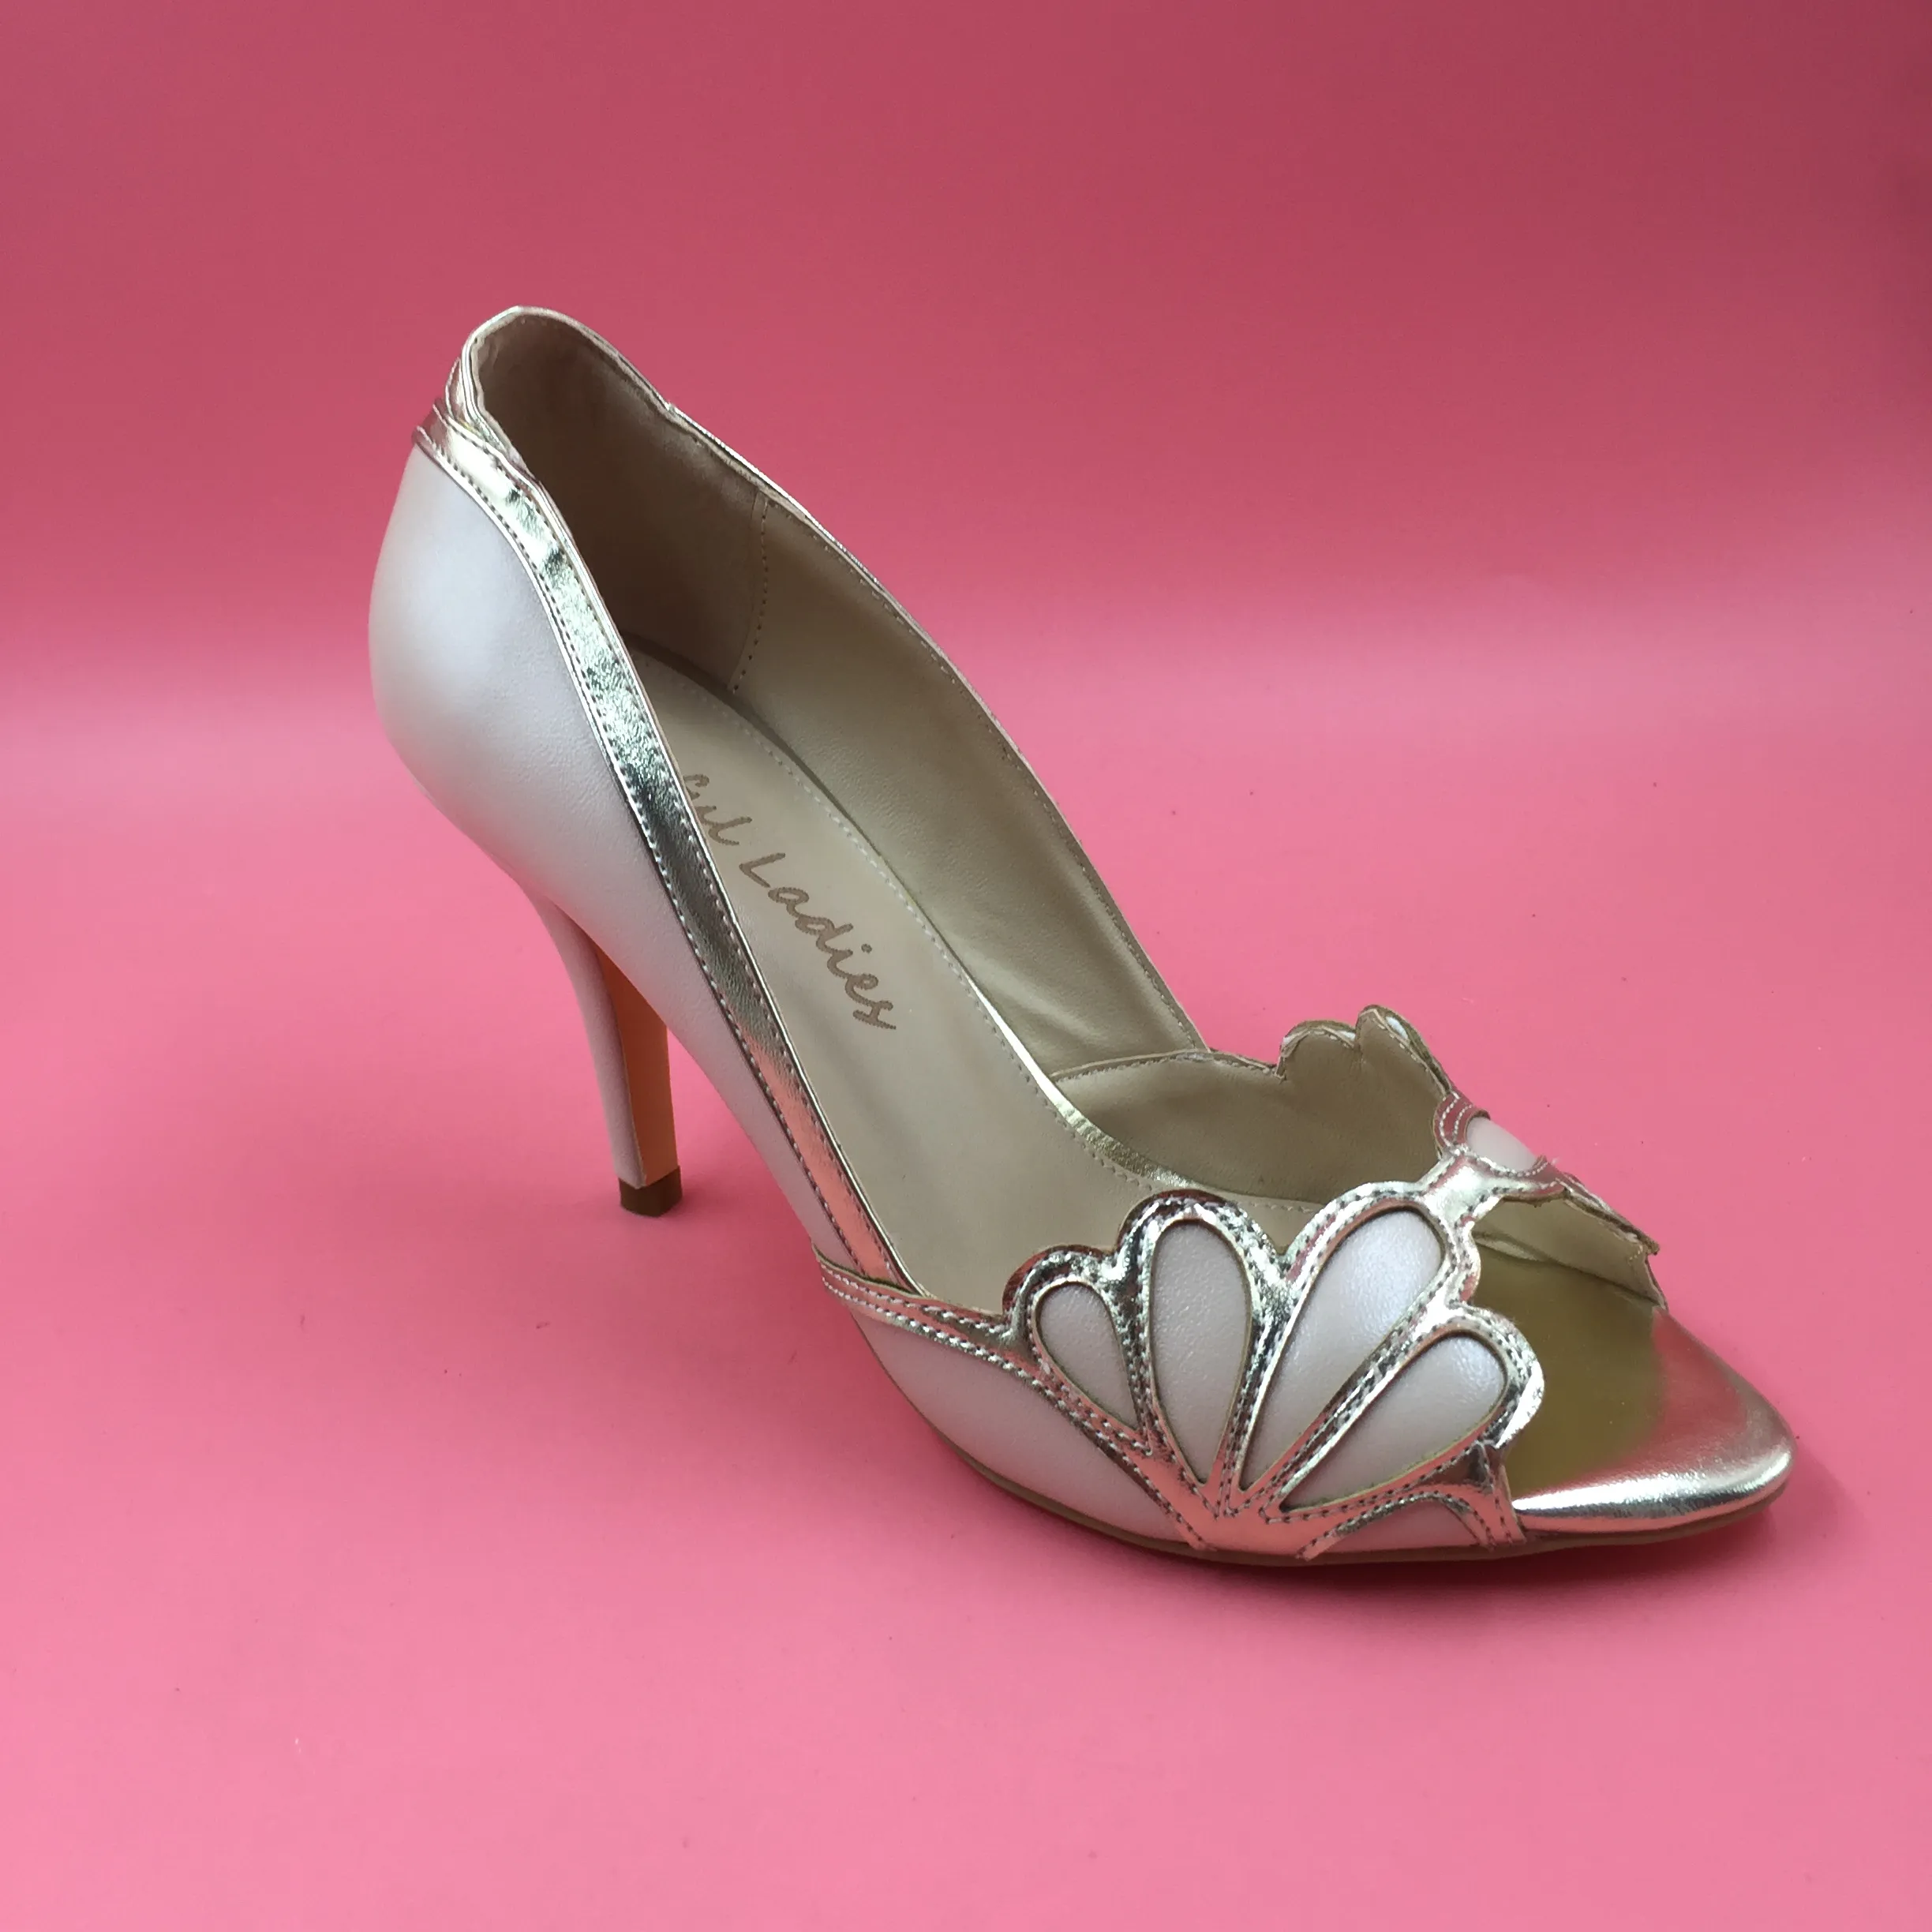 Real Blue Wedding Shoes 2016 Vintage Bridal Isabella Talon festonné Chaton PU Peep Toe Custom Made Sandales Pompes Sexy Elegant Prom Shoes